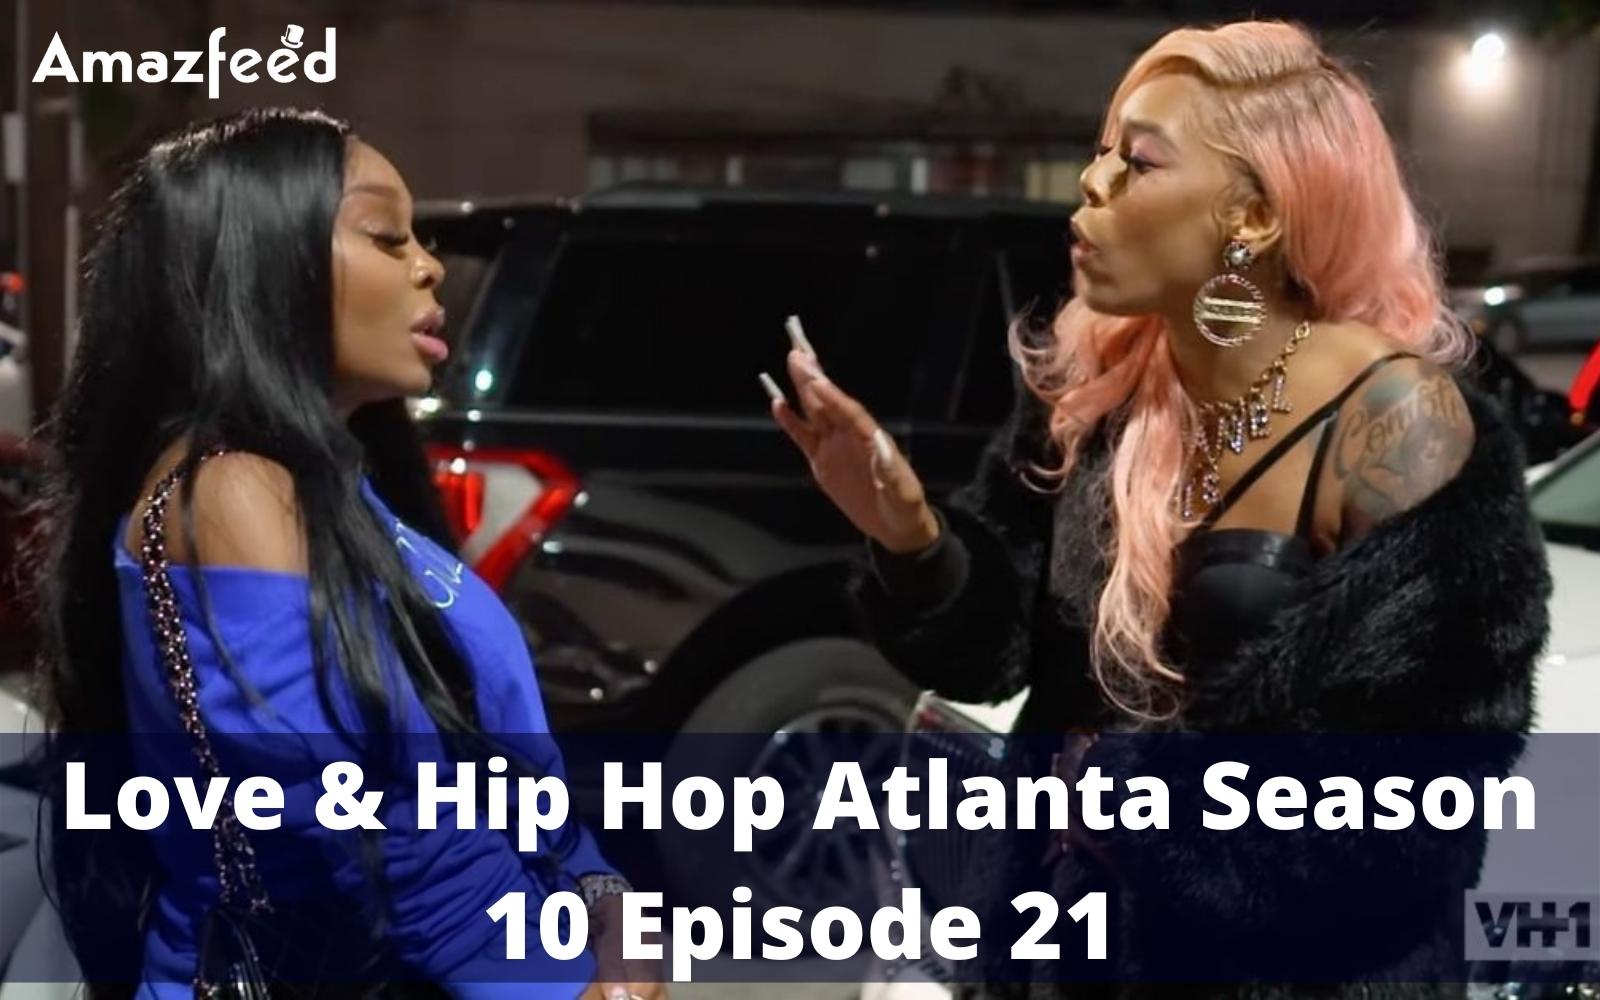 Love & Hip Hop Atlanta Season 10 Episode 21 : Countdown, Release Date, Recap, Spoiler, Teaser